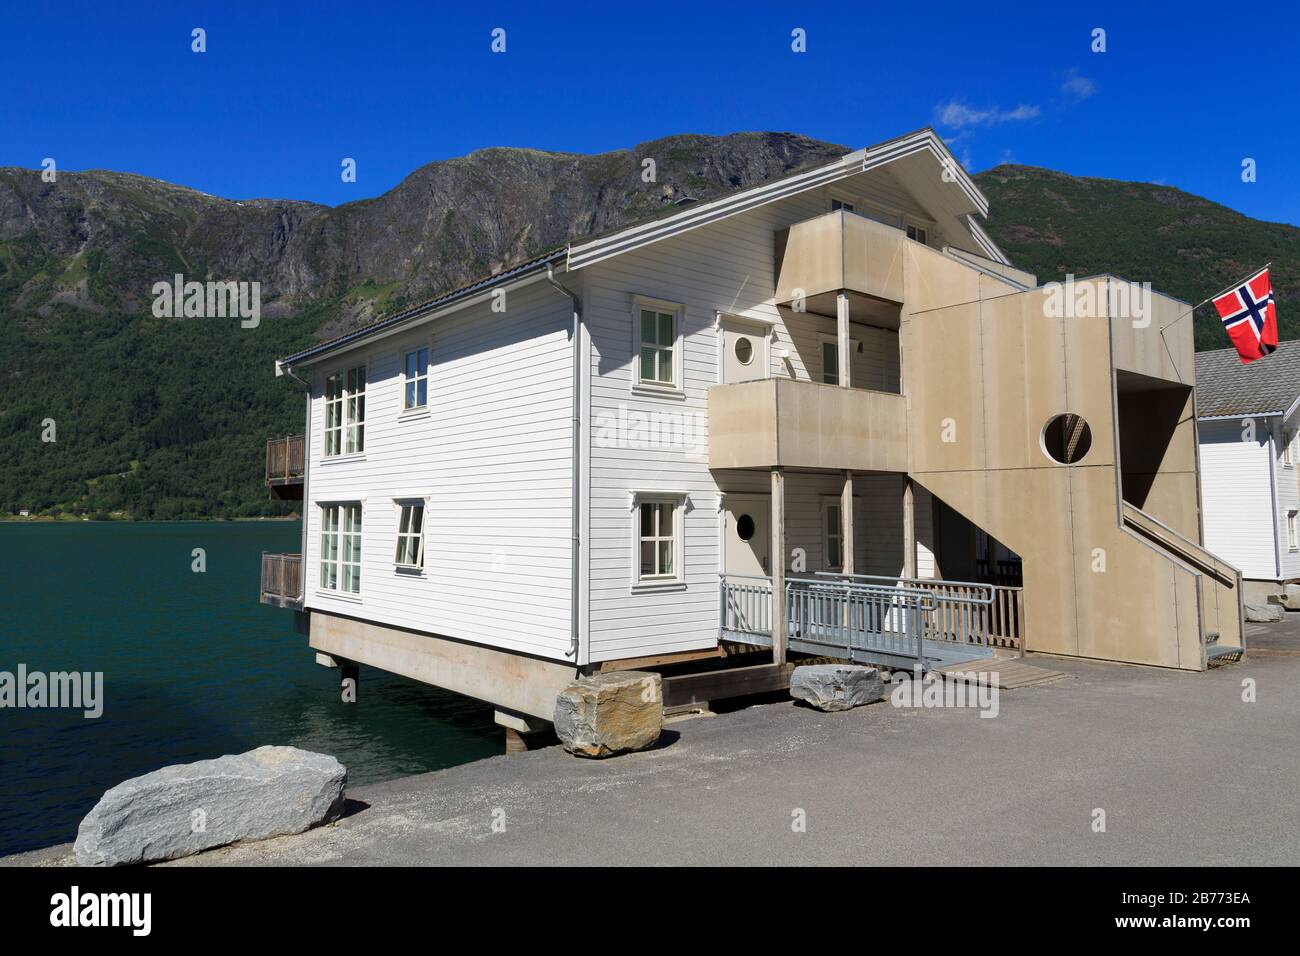 Holiday homes, Skjolden Village, Sognefjord, Sogn og Fjordane County, Norway Stock Photo